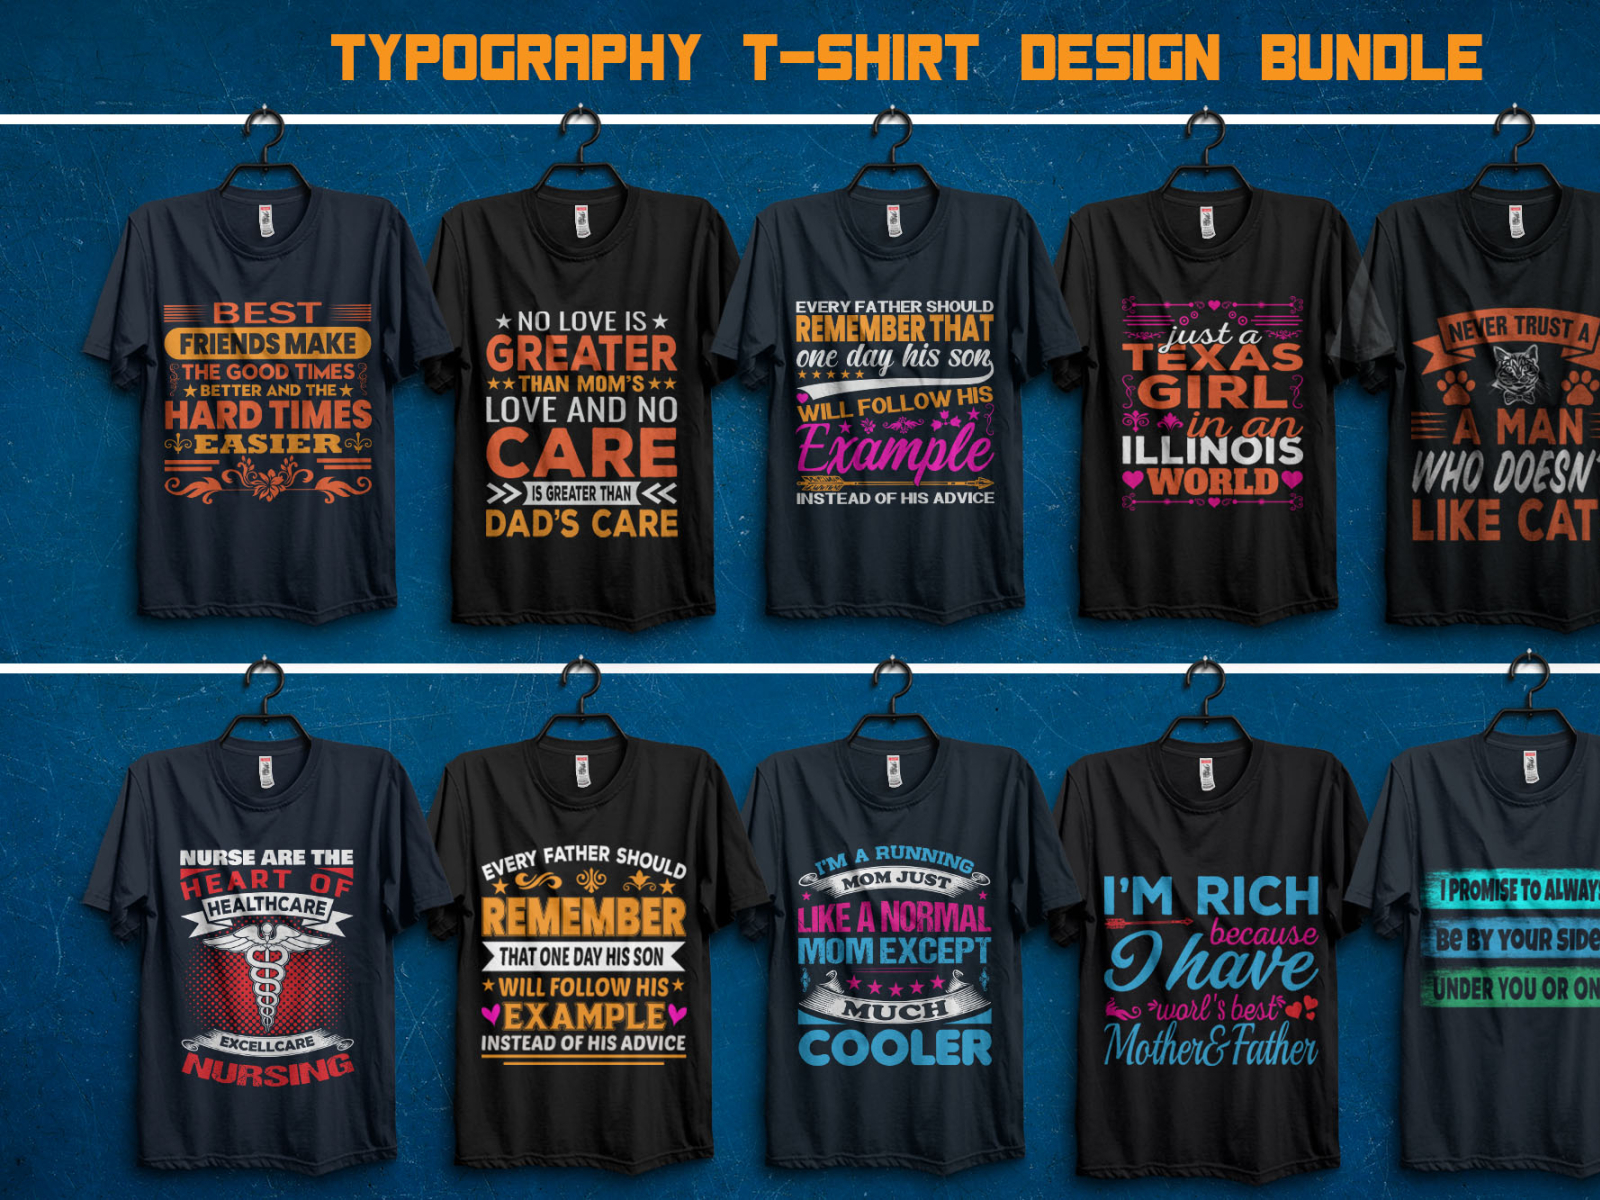 Typography T-shirt Design bundle by Sujan miah on Dribbble